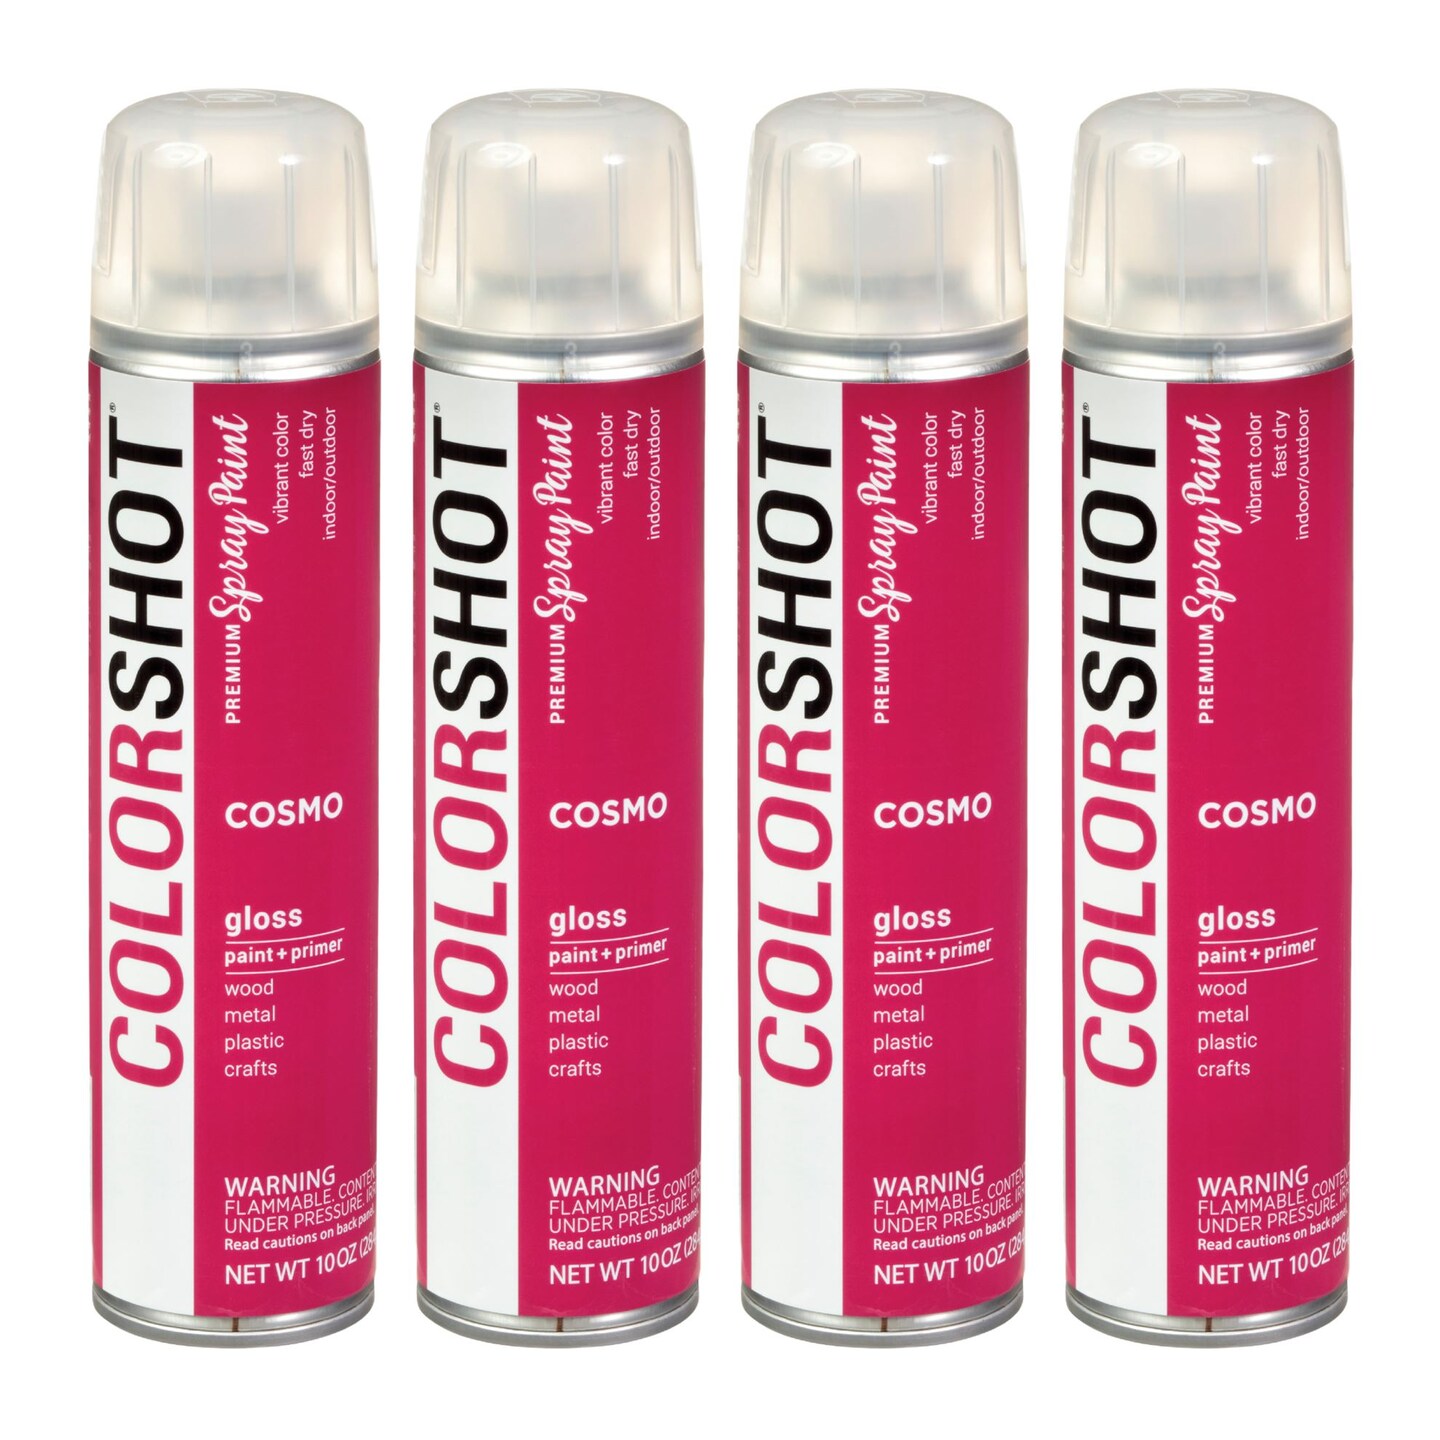 COLORSHOT Gloss Spray Paint Cosmo (Fuchsia) 10 oz. 4 Pack